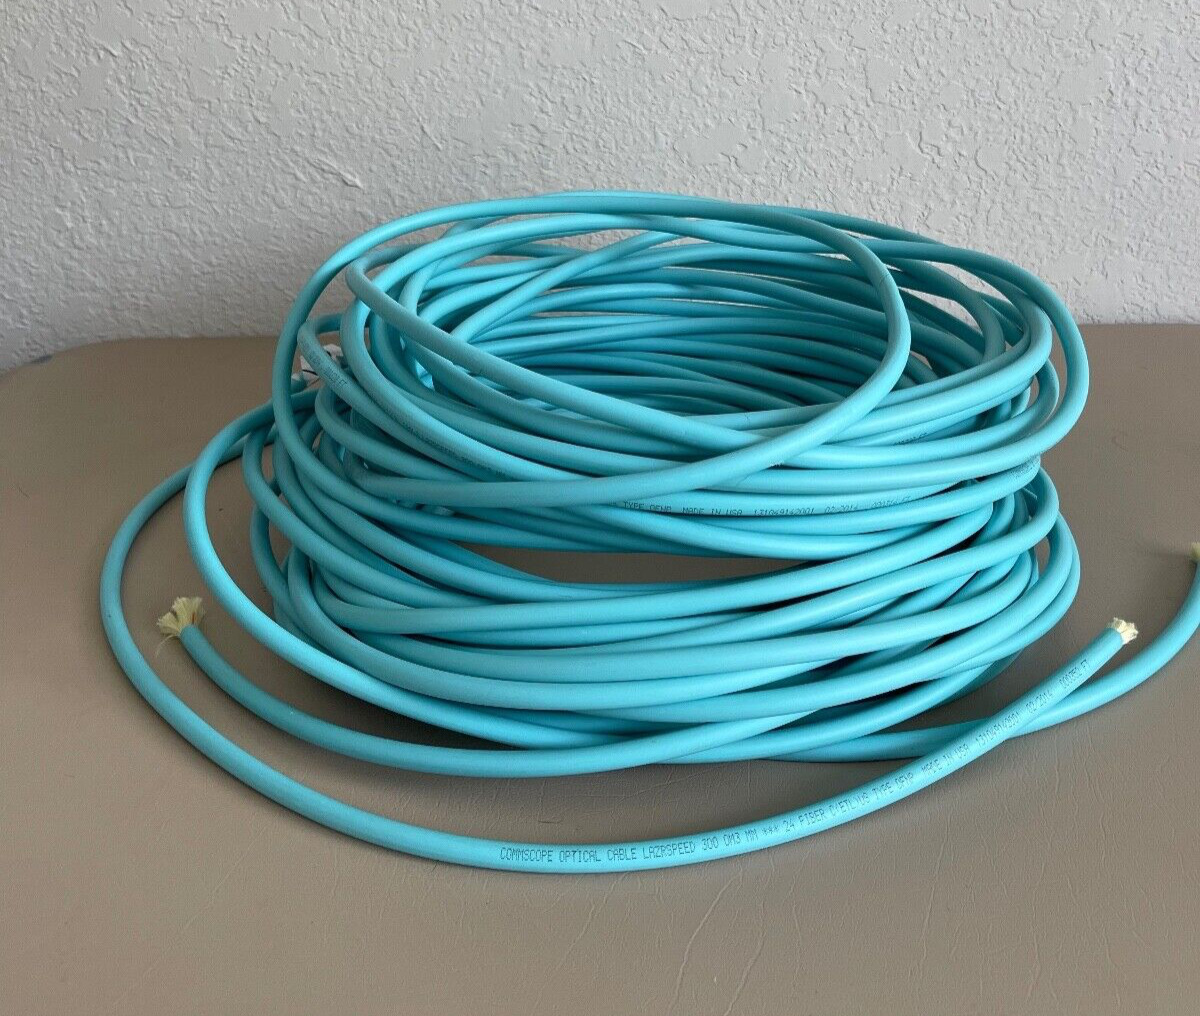 Commscope Lazrspeed 12 Fiber Optic Cable 300 OM3 Type OFNP 140 Feet